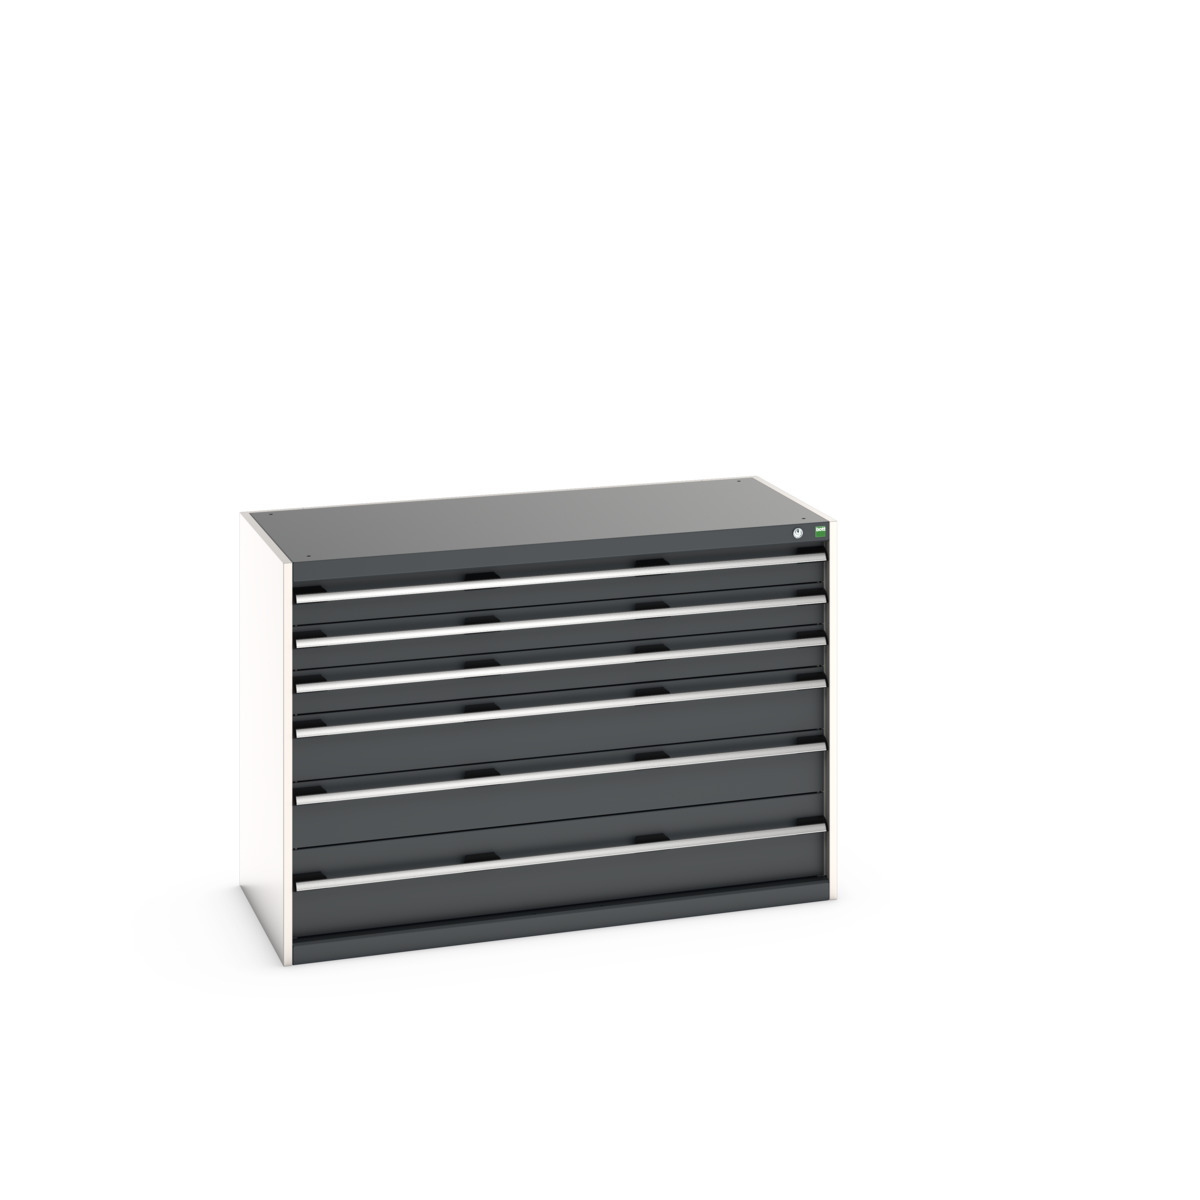 40022115. - cubio drawer cabinet